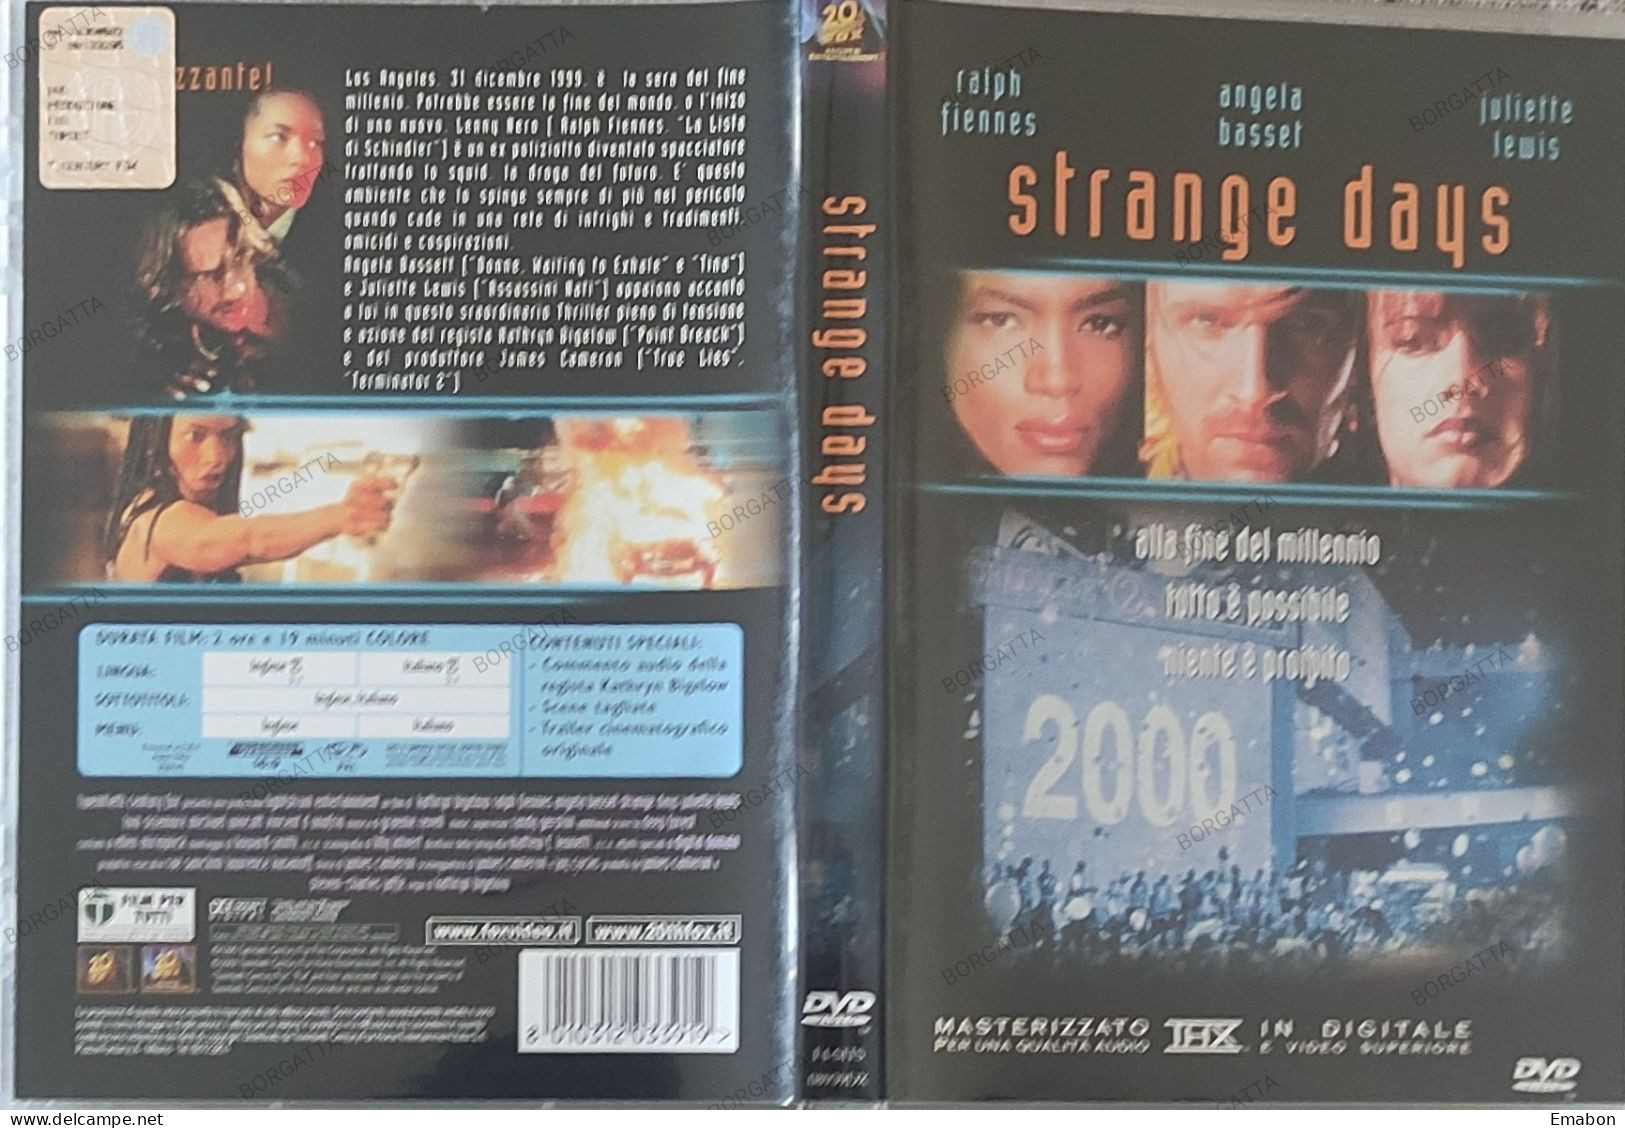 BORGATTA - FANTASCIENZA - Dvd STRANGE DAYS - FIENNES, BASSET  - PAL 2 - 20THFOX 2002- USATO In Buono Stato - Sciencefiction En Fantasy